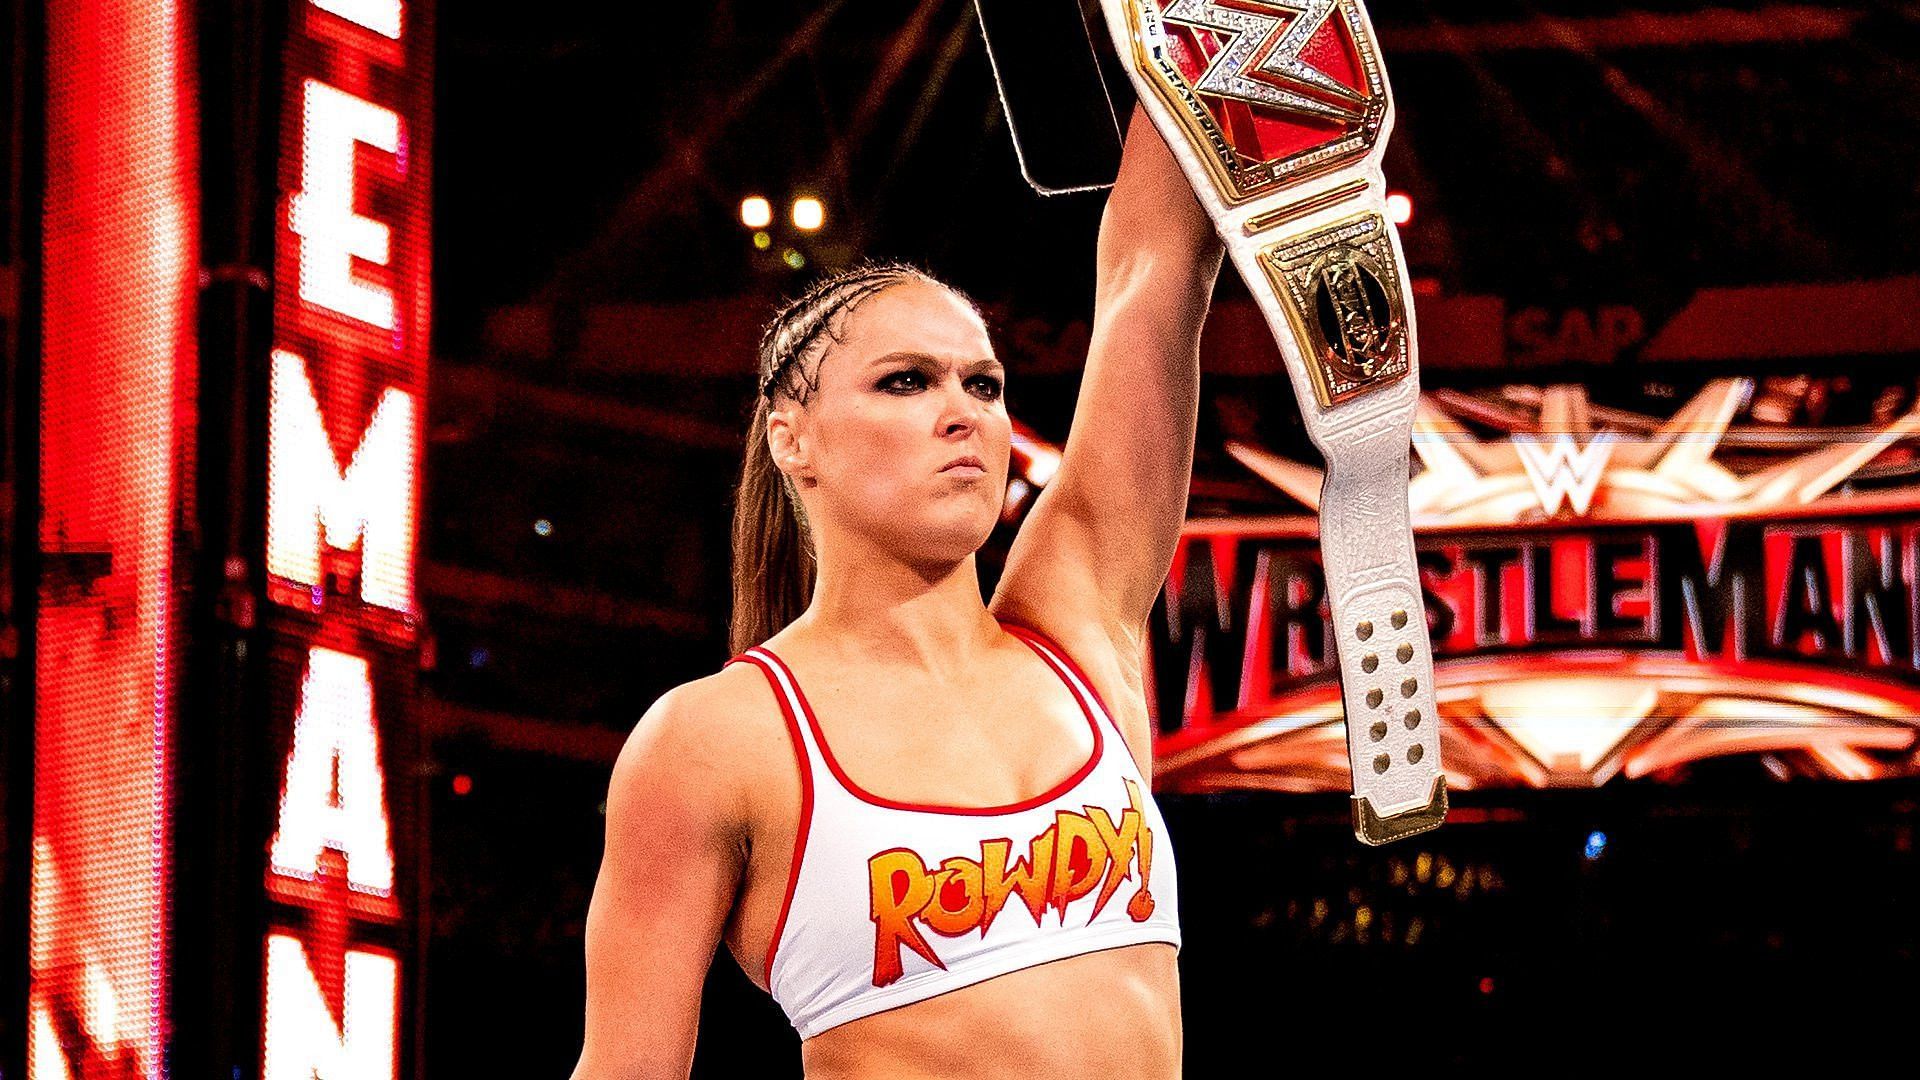 Ronda won her first WWE championship at Summerslam 2018